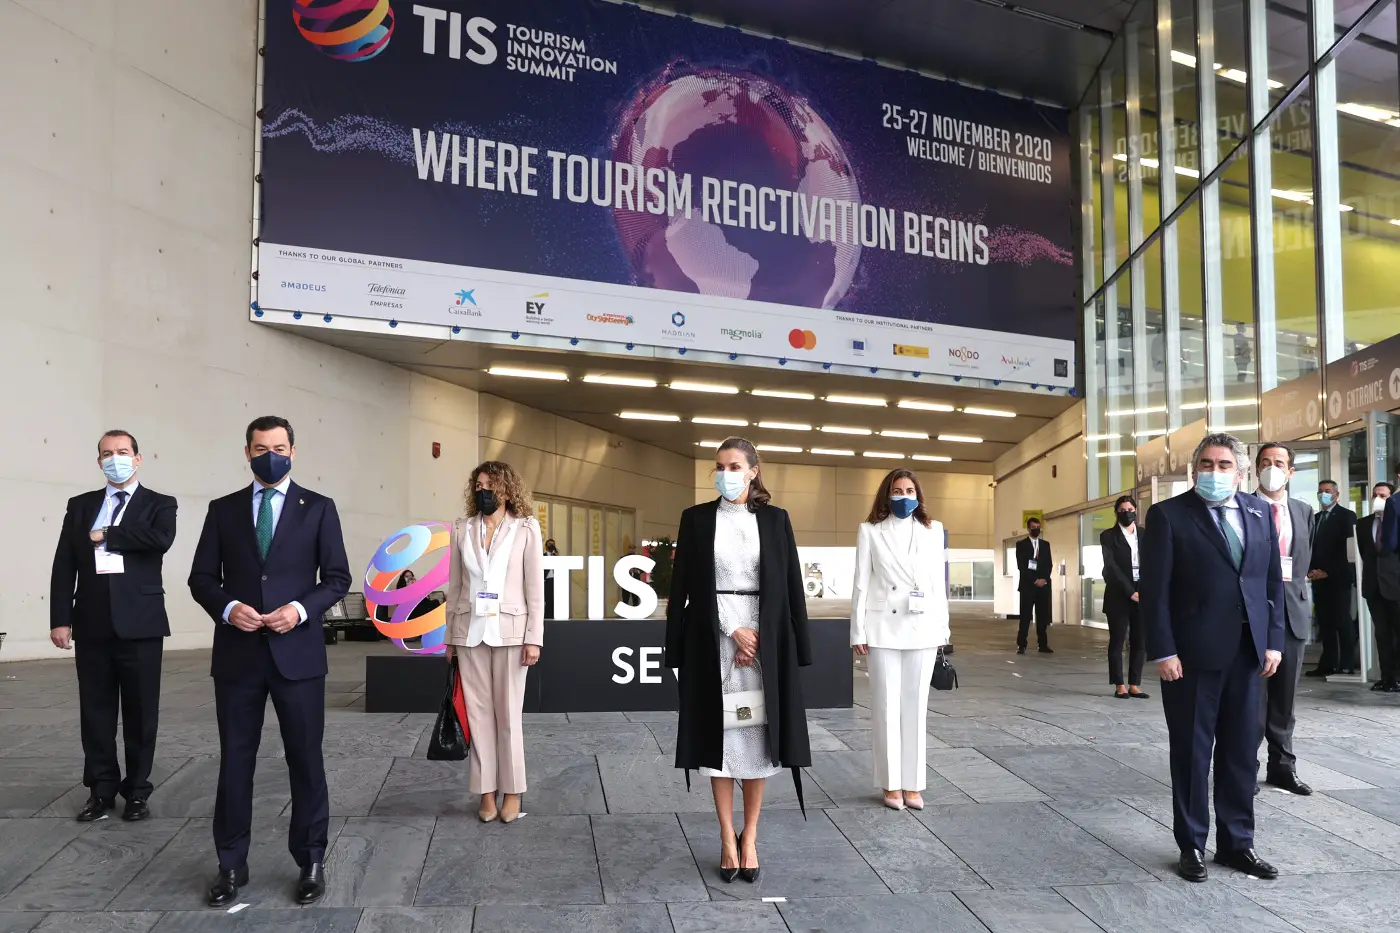 Queen Letizia of Spain brought back her Ana Cherubina Didi Dress for Tourism summit